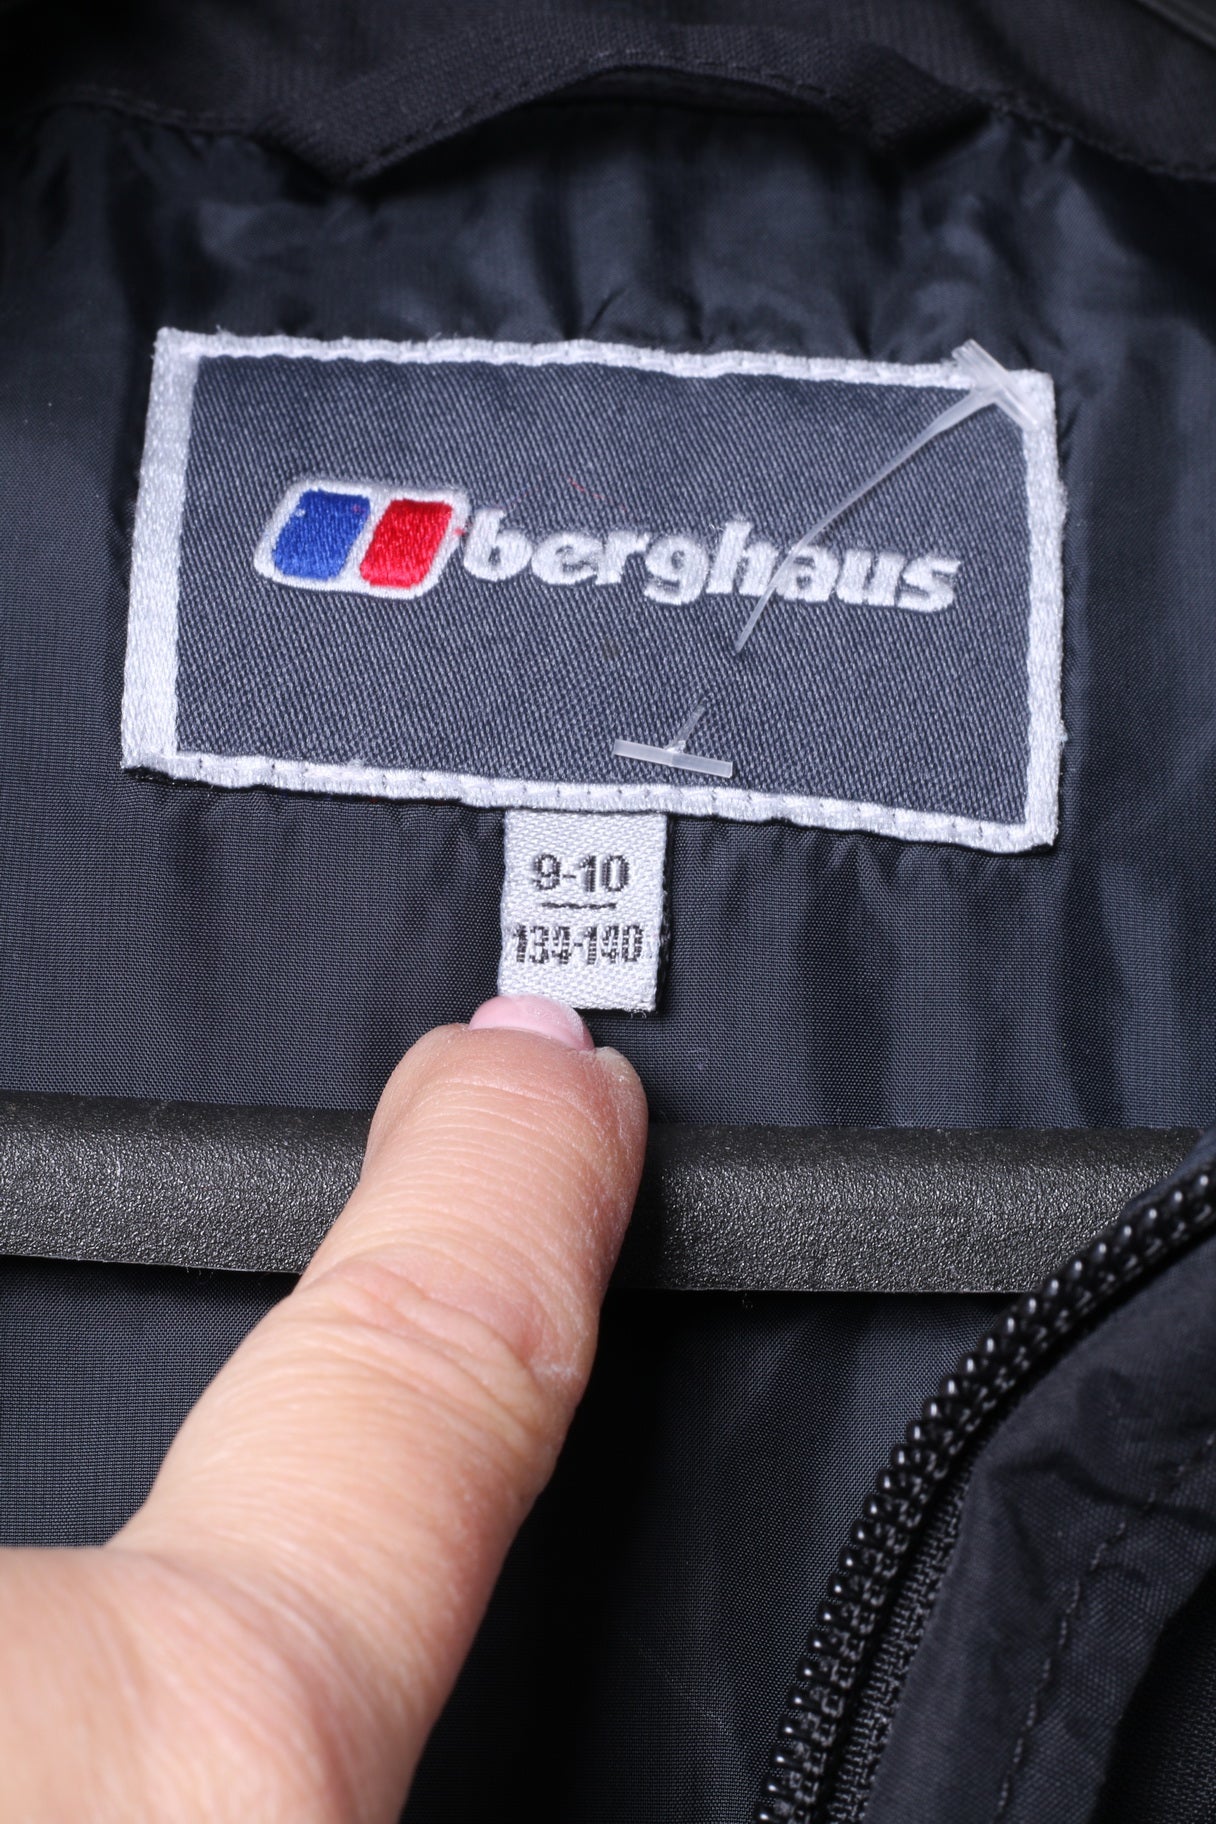 Berghaus Boys 9-10 Age 134-140 Jacket Black Padded Hooded Outdoor Top